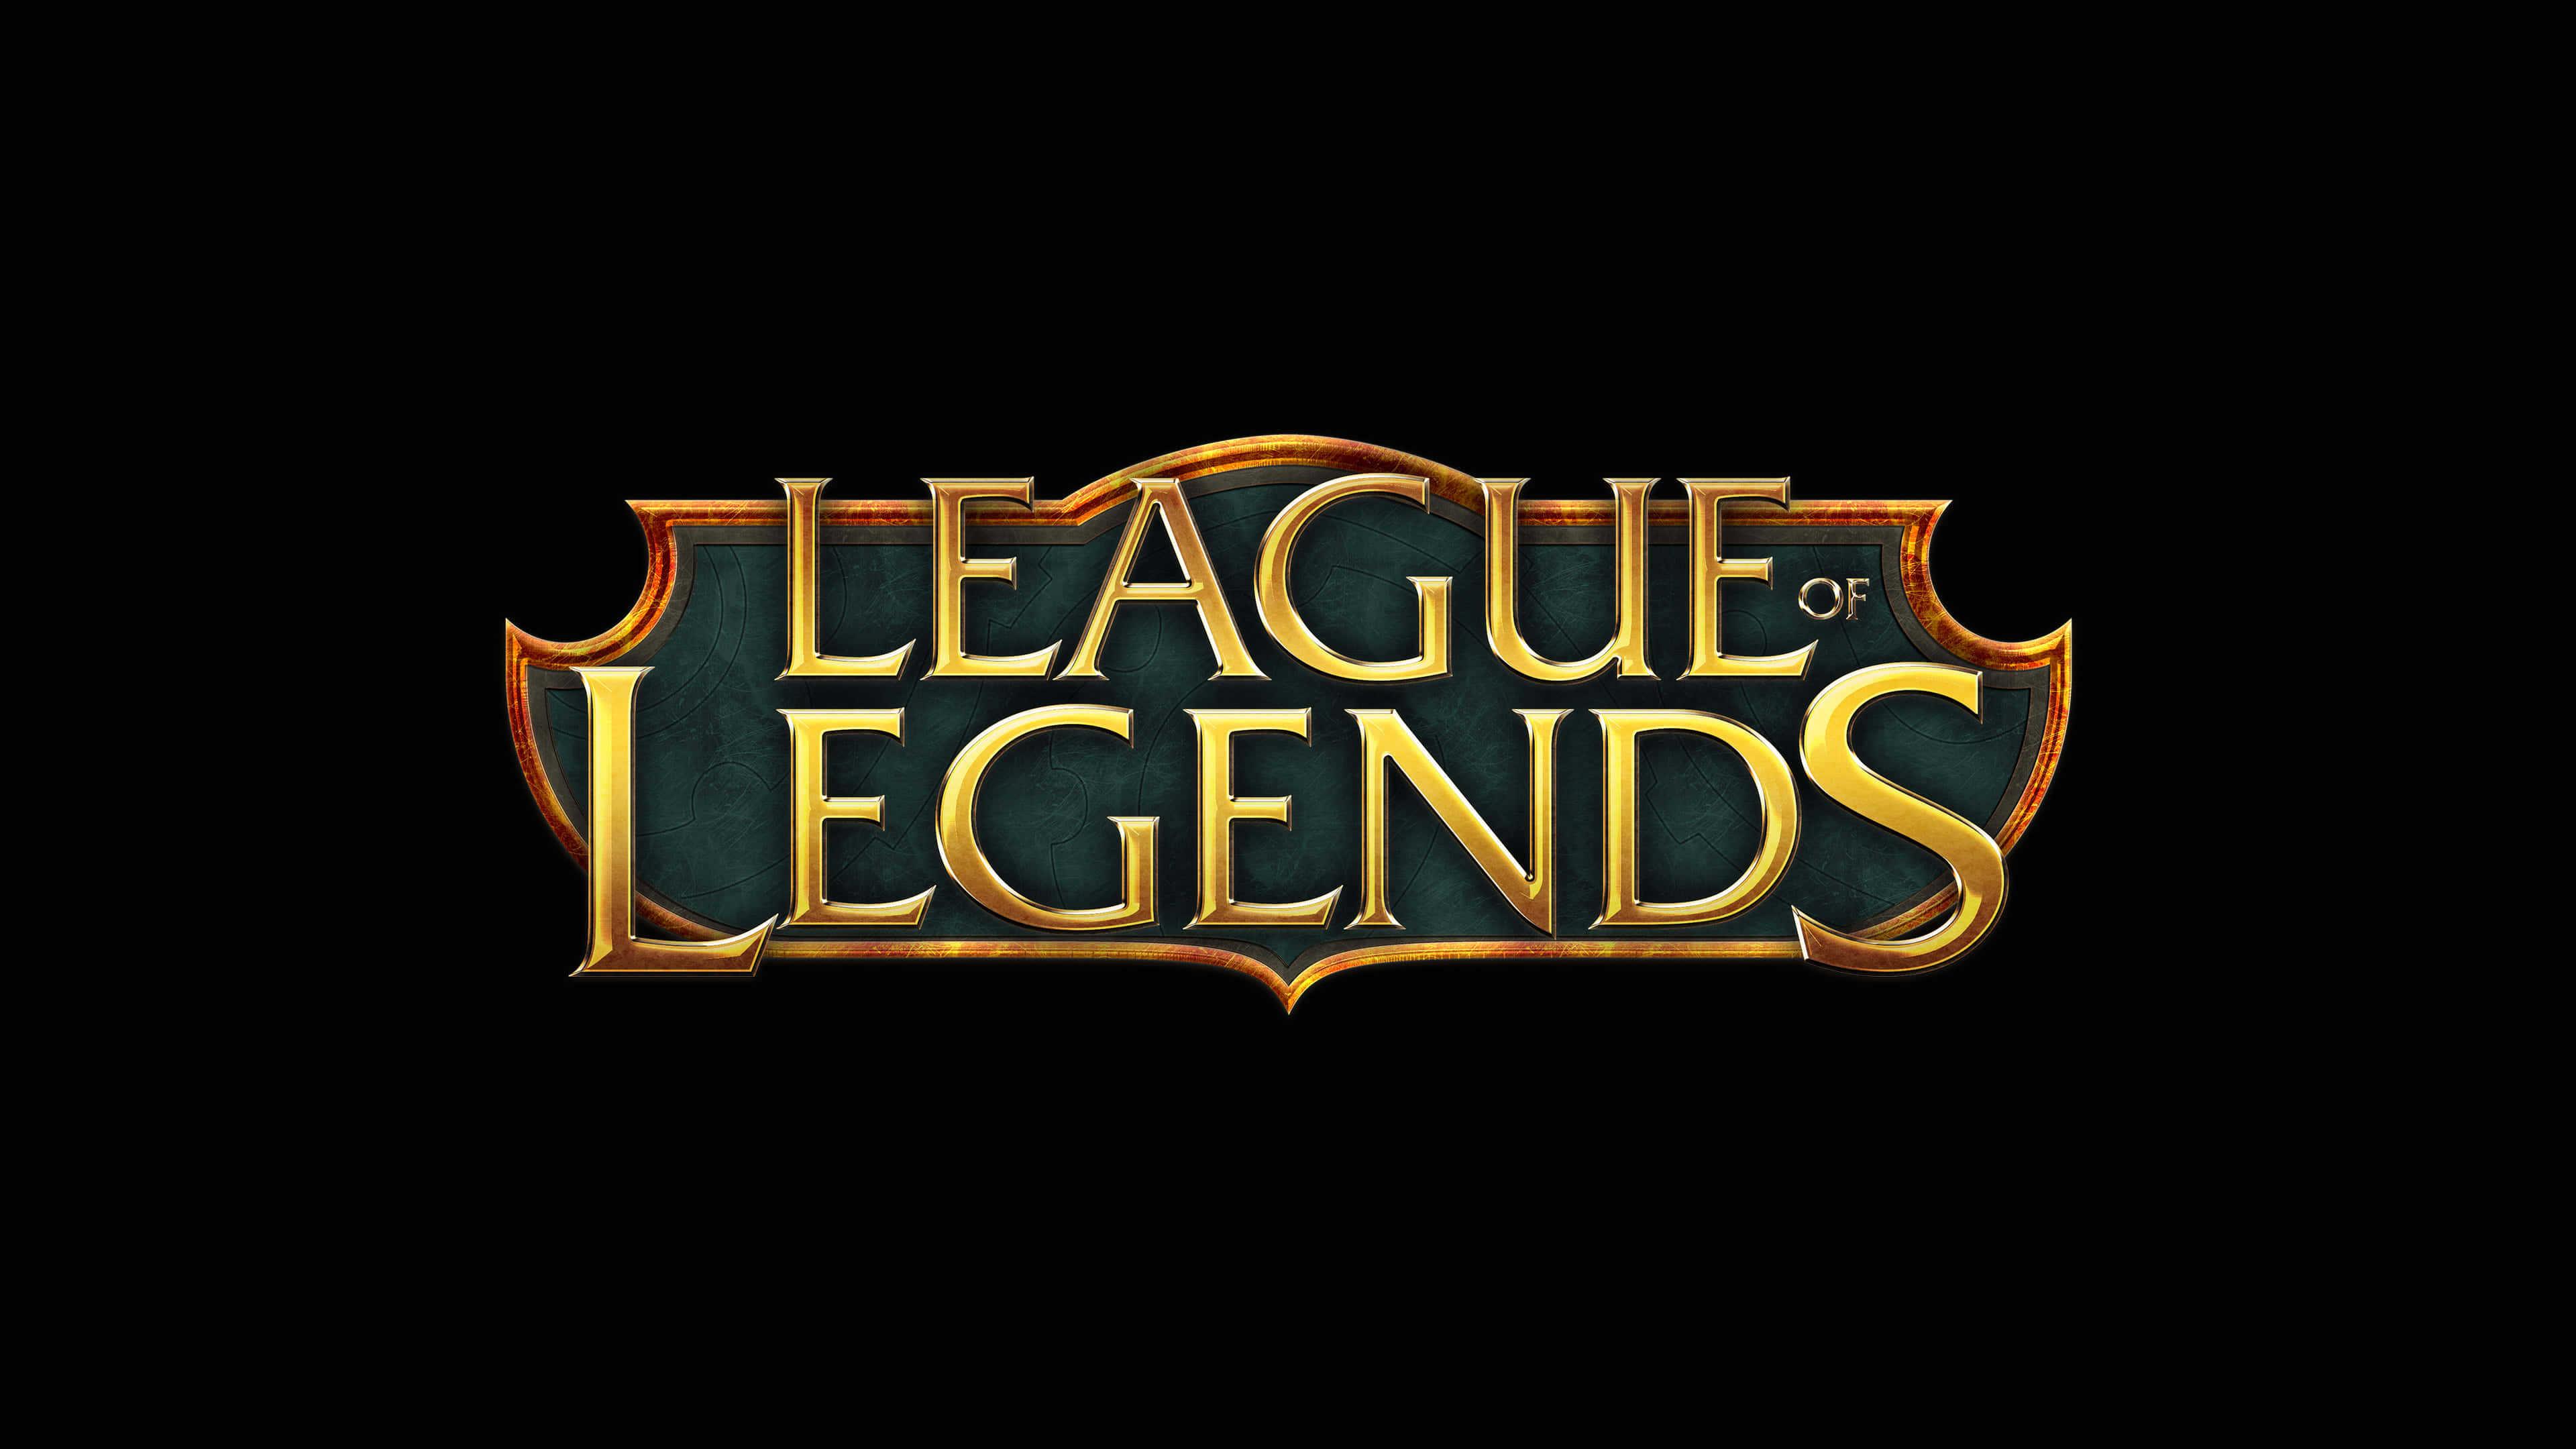 Legends Logo - League Of Legends Logo UHD 4K Wallpaper | Pixelz